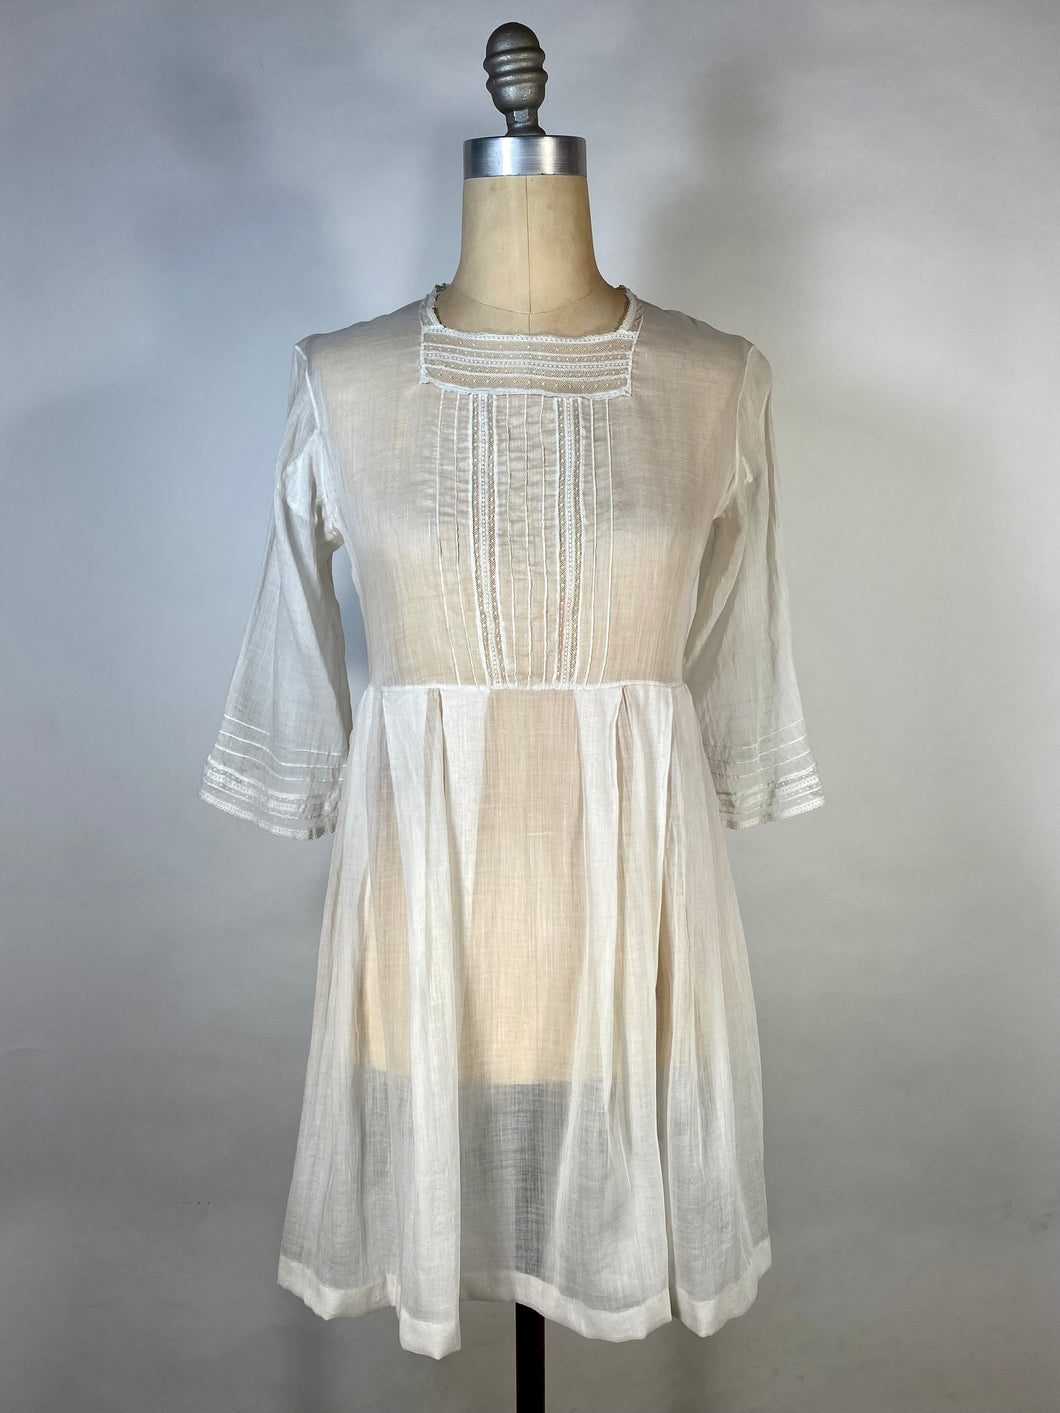 1900's-1910's Edwardian ANGELIC sheer cotton batiste dress size XXS-XS